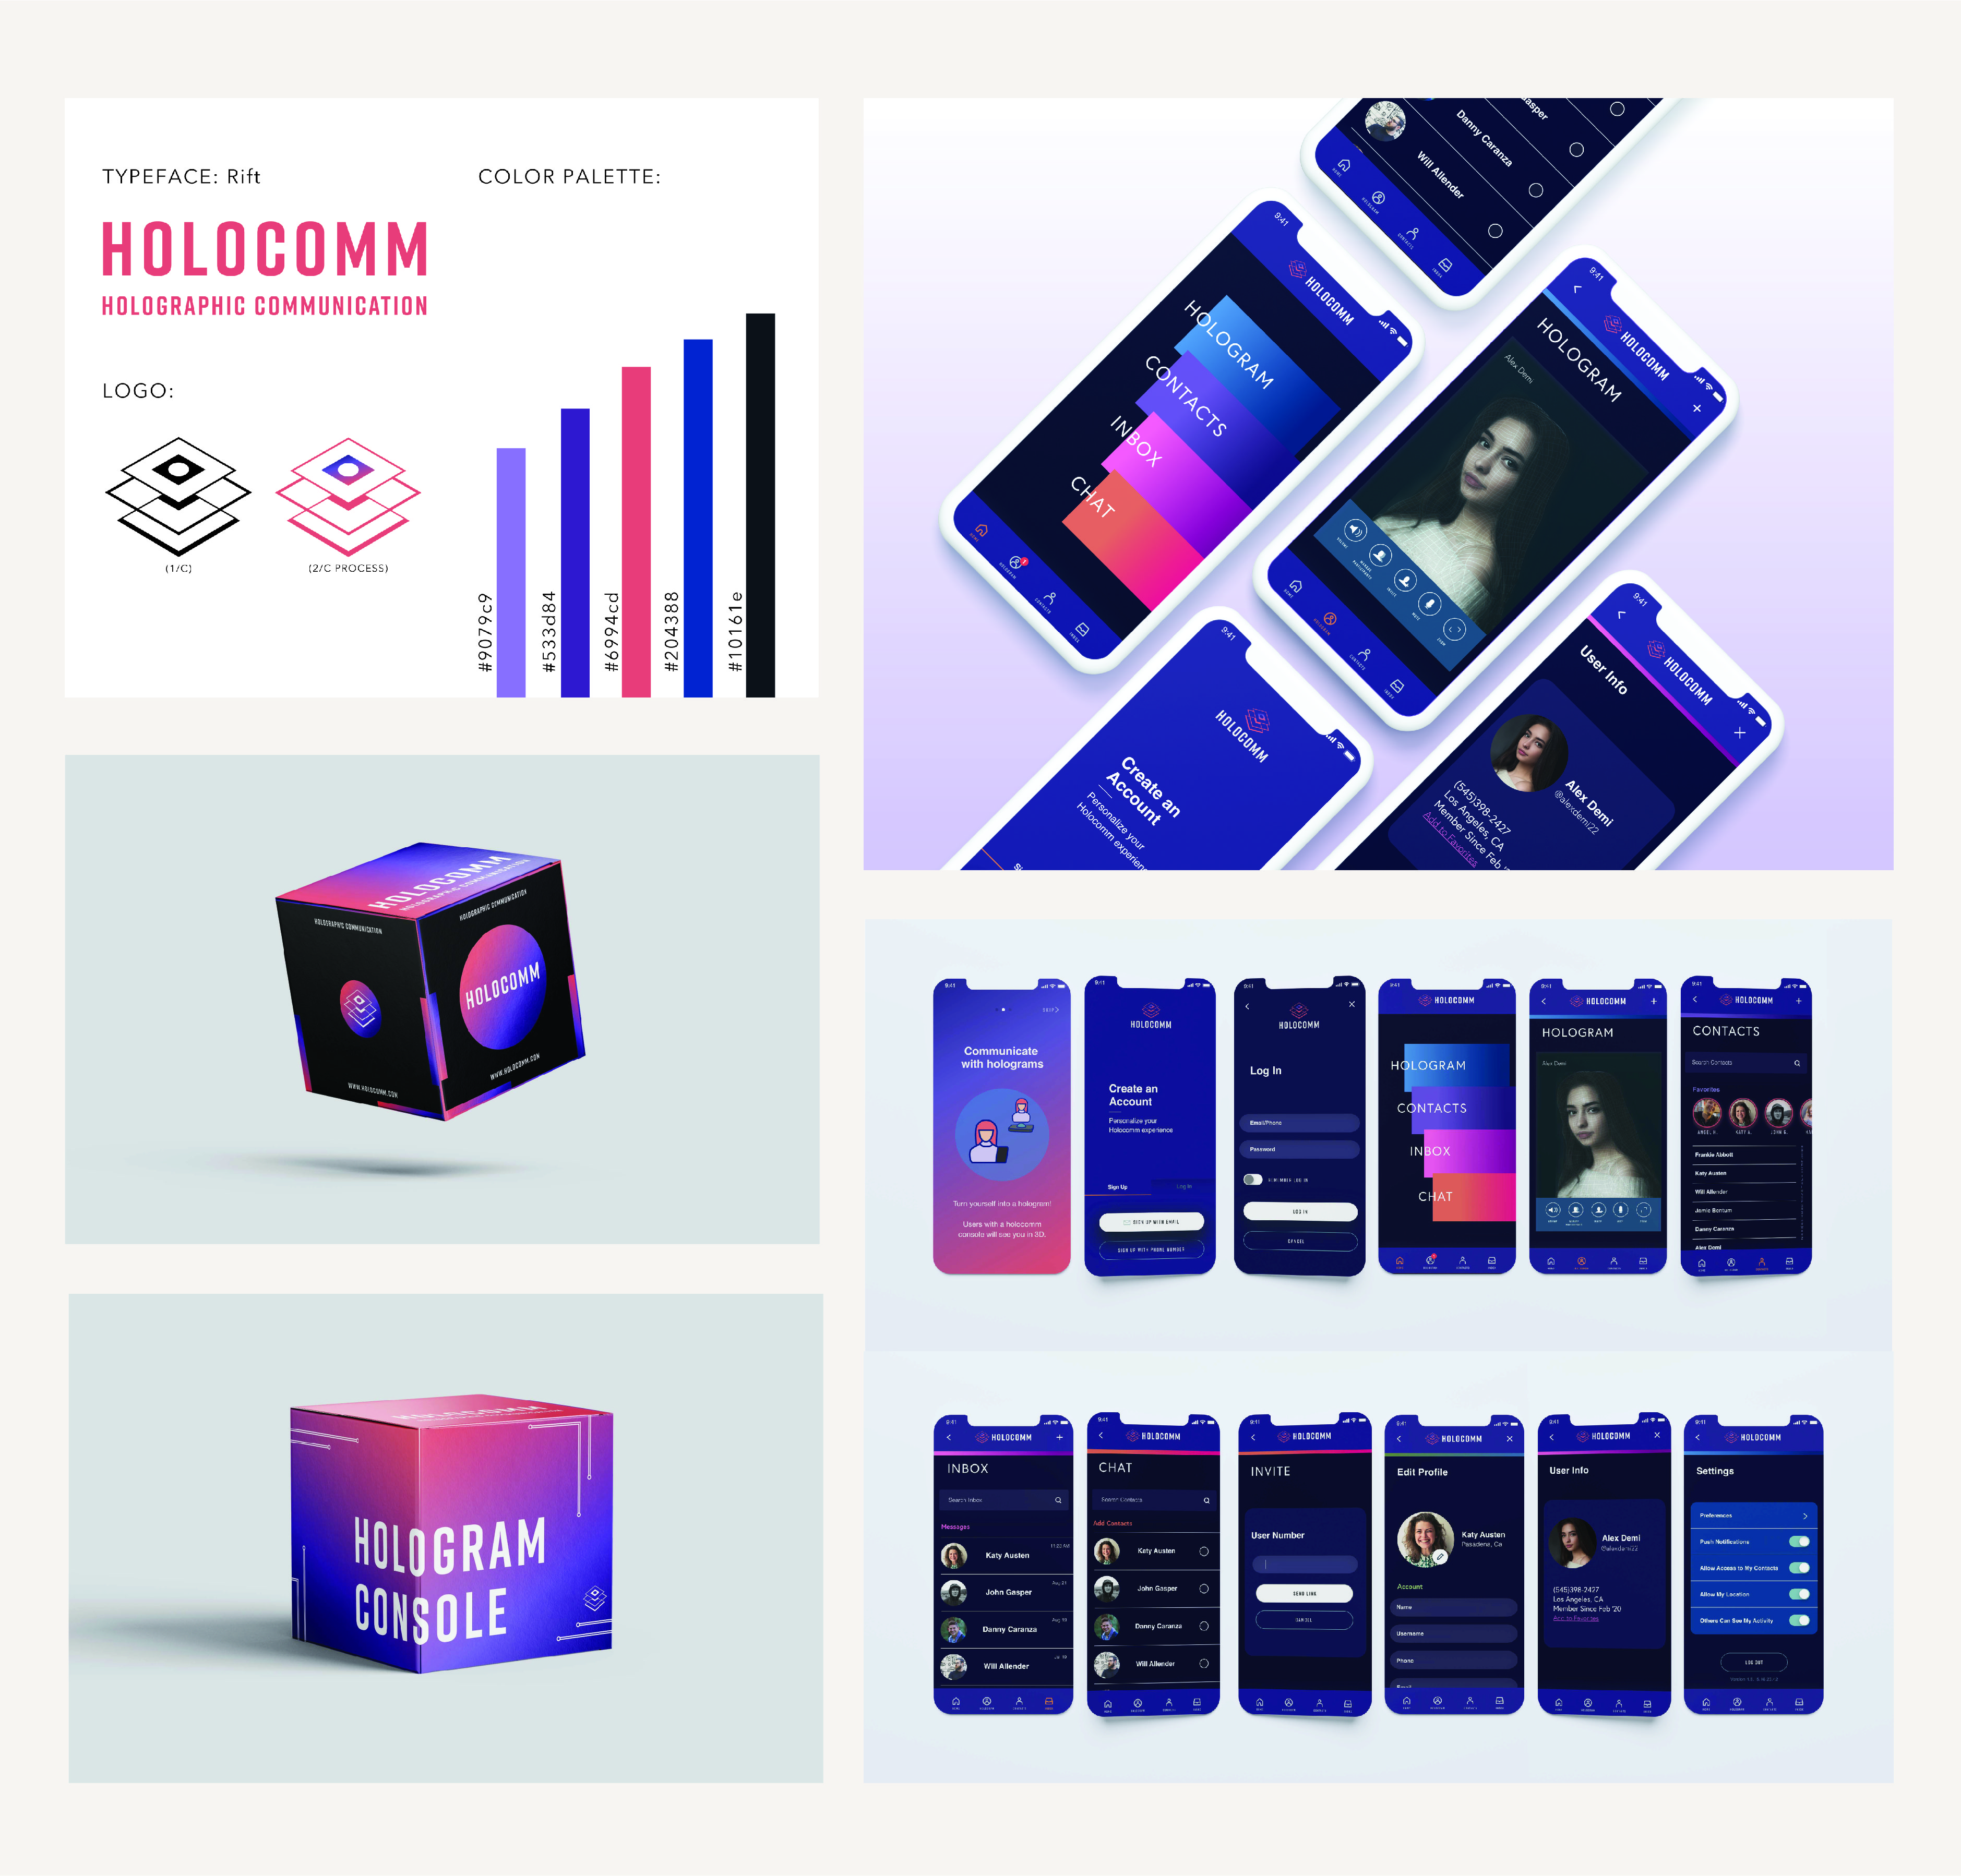 Holocomm App & Branding